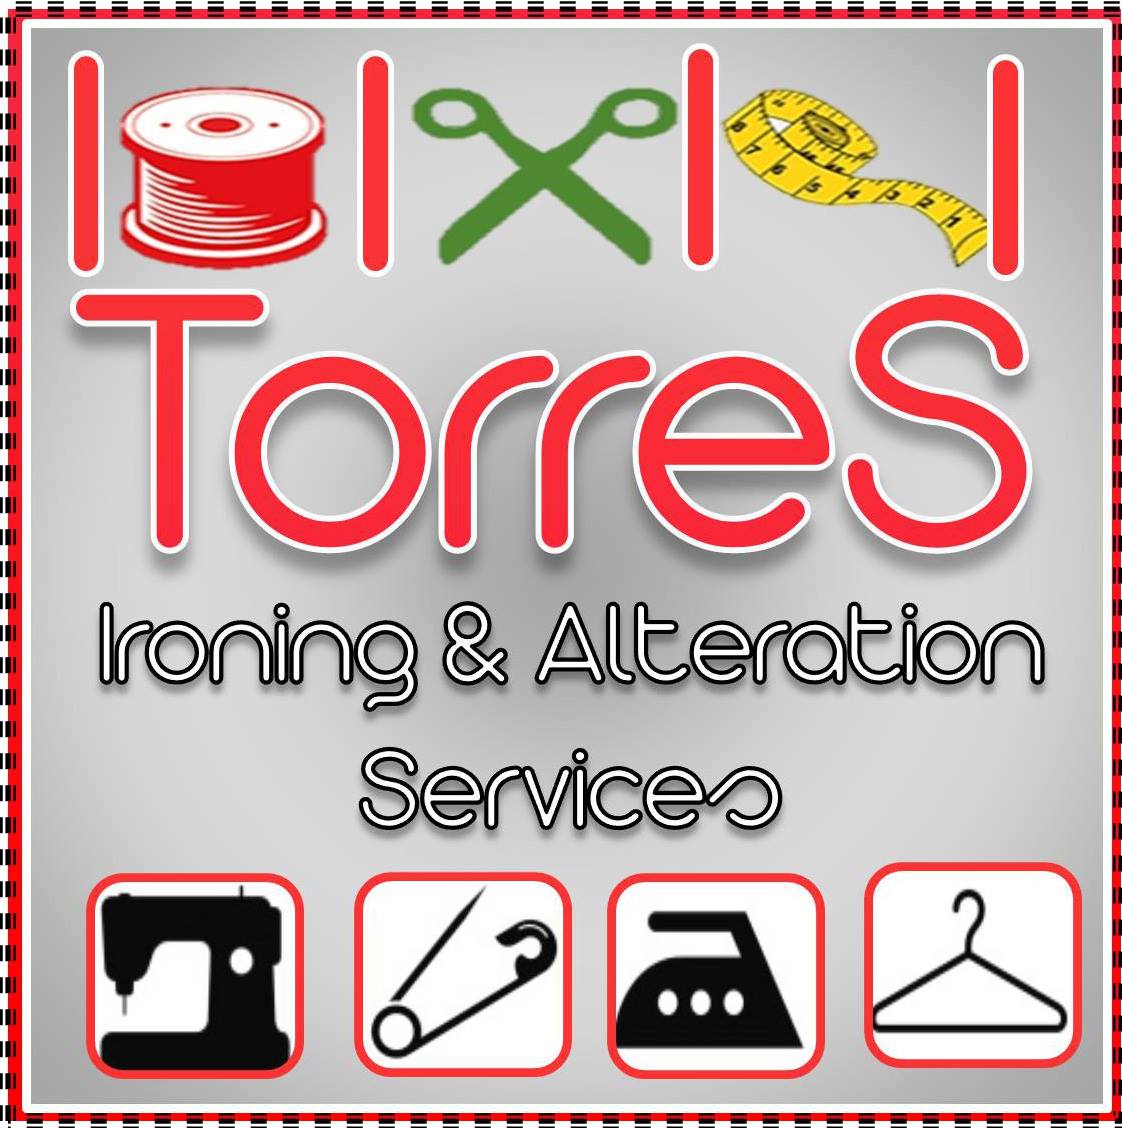 Torres Ironing & Alteration